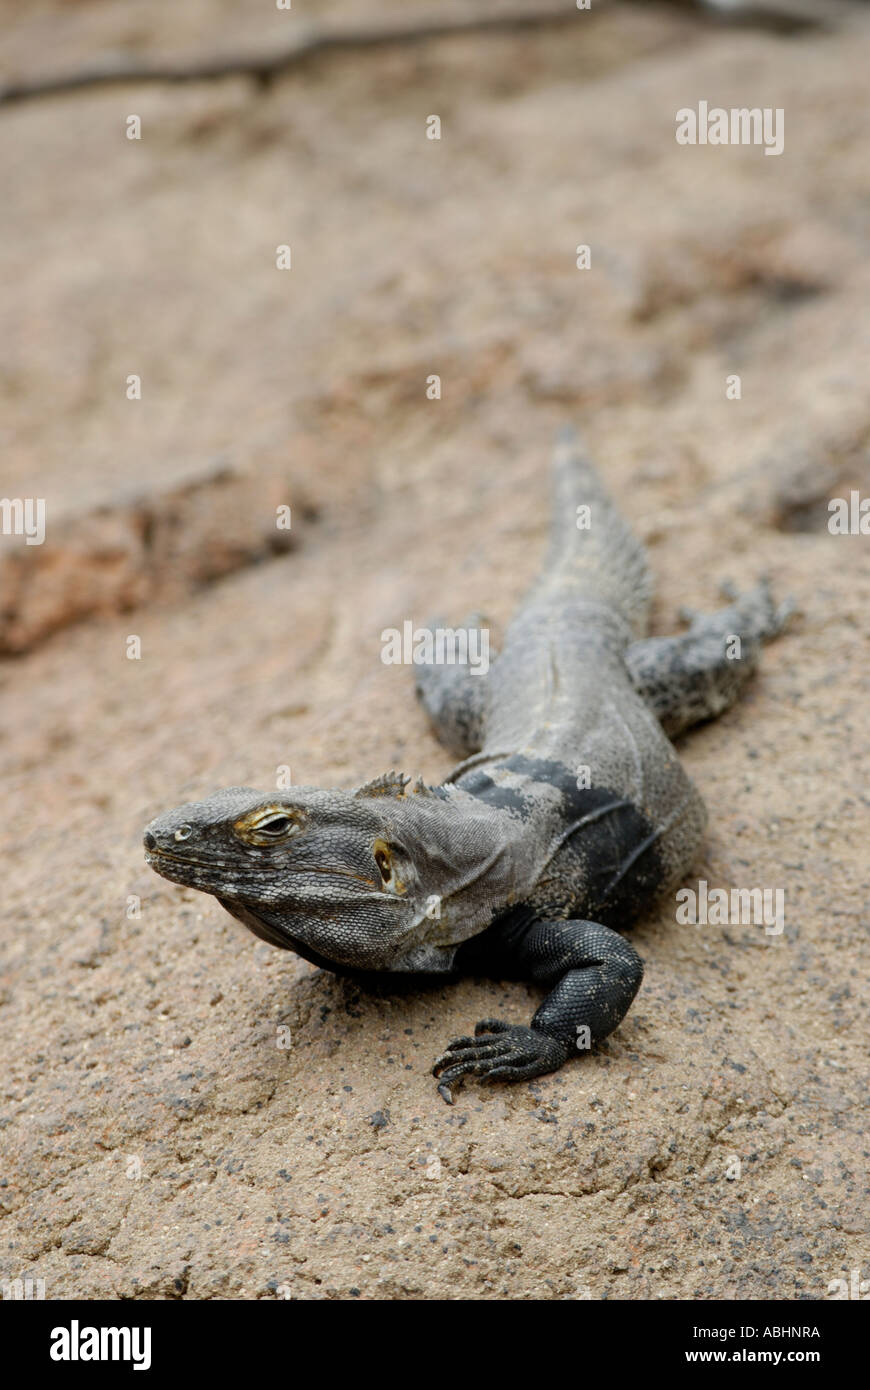 Spiny tailed iguana, Ctenosaura hemilopha or similis, on a rock, Sonora Desert Stock Photo